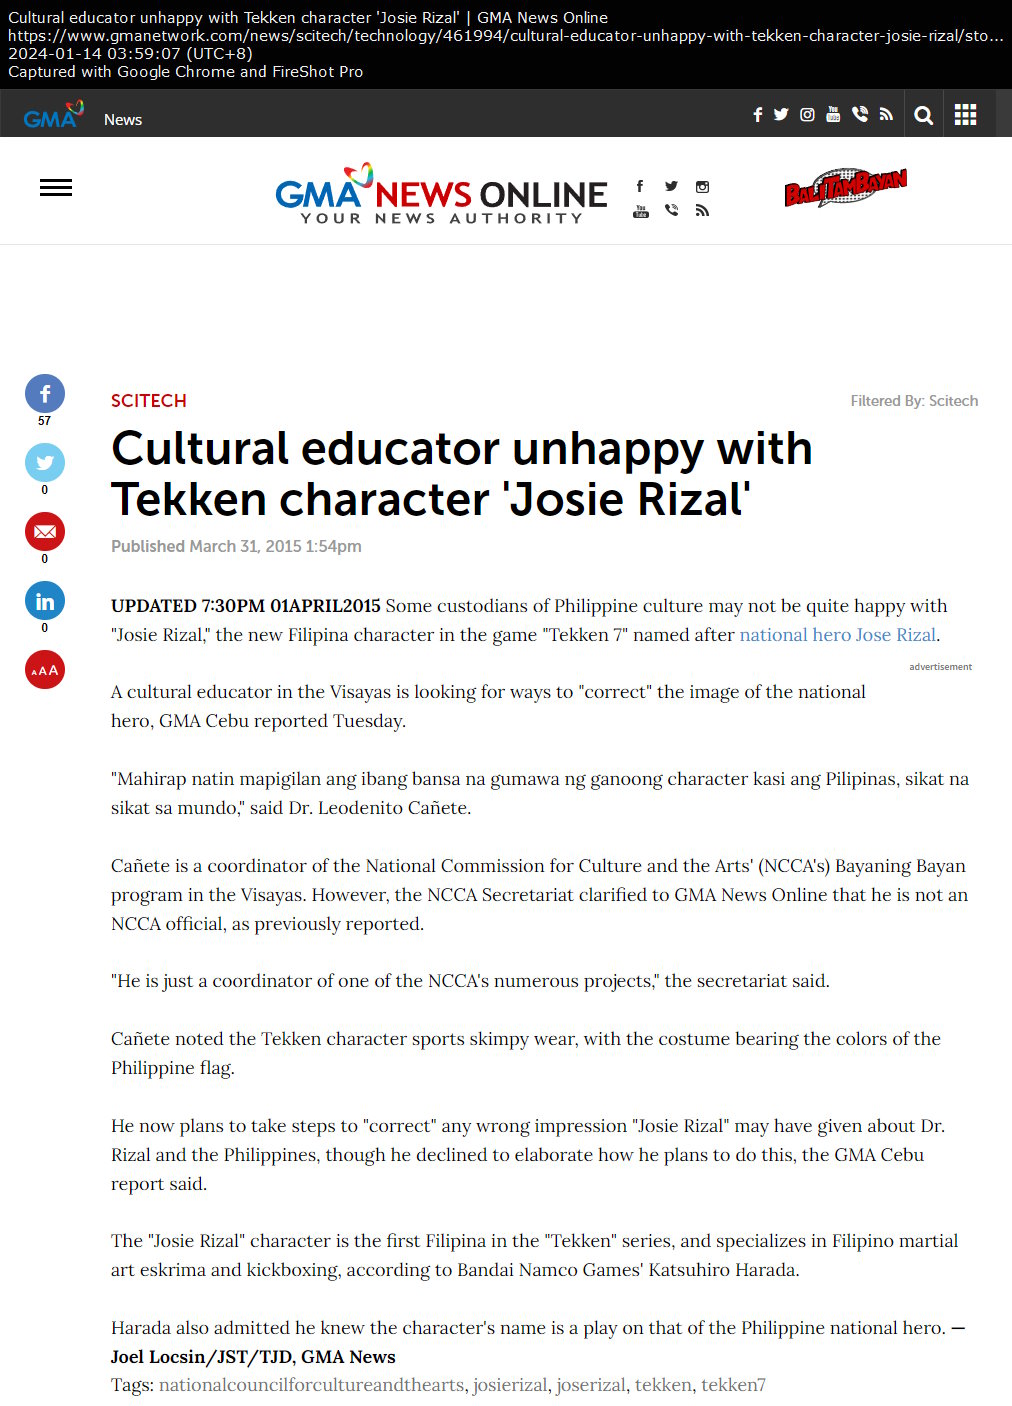 Cultural educator unhappy with Tekken character 'Josie Rizal' (updated)